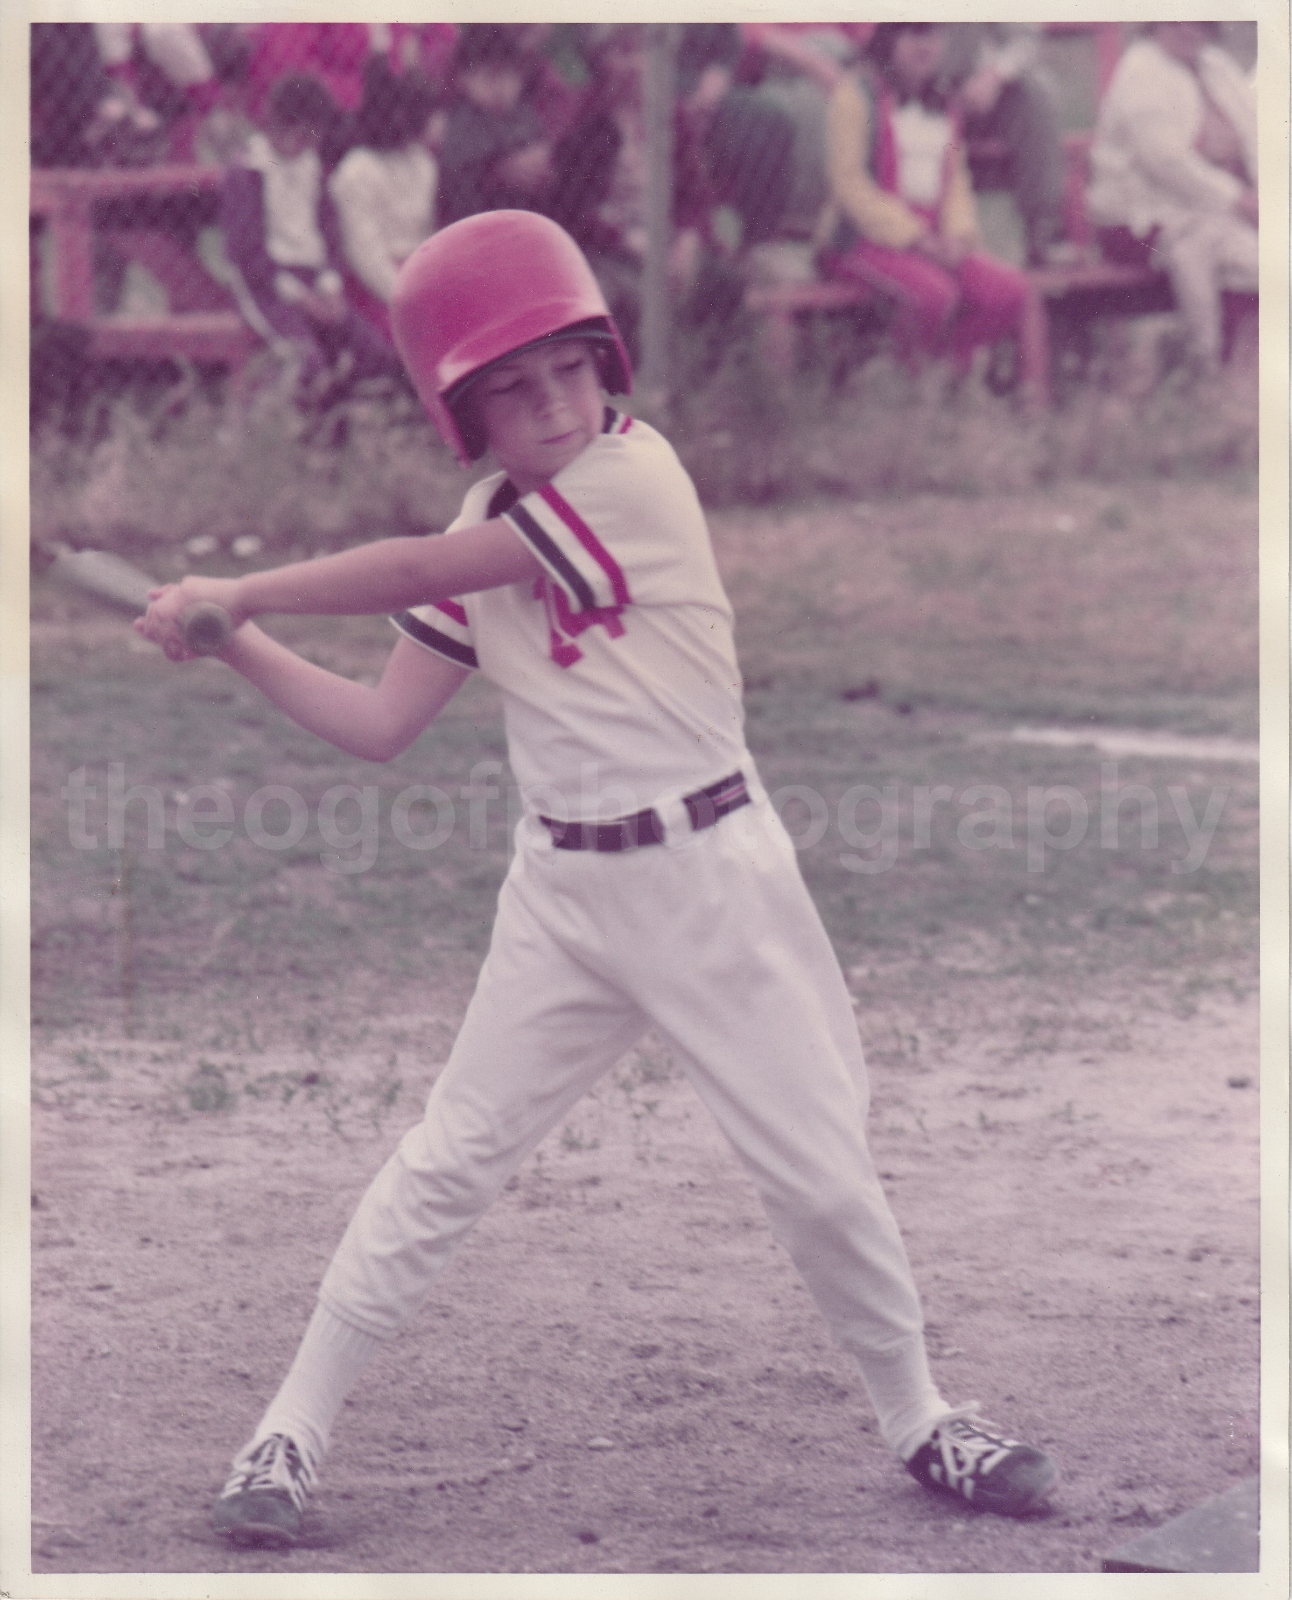 Baseball Kid FOUND Photo Poster painting 8x10 ColorSwinging The Bat VINTAGE 82 11